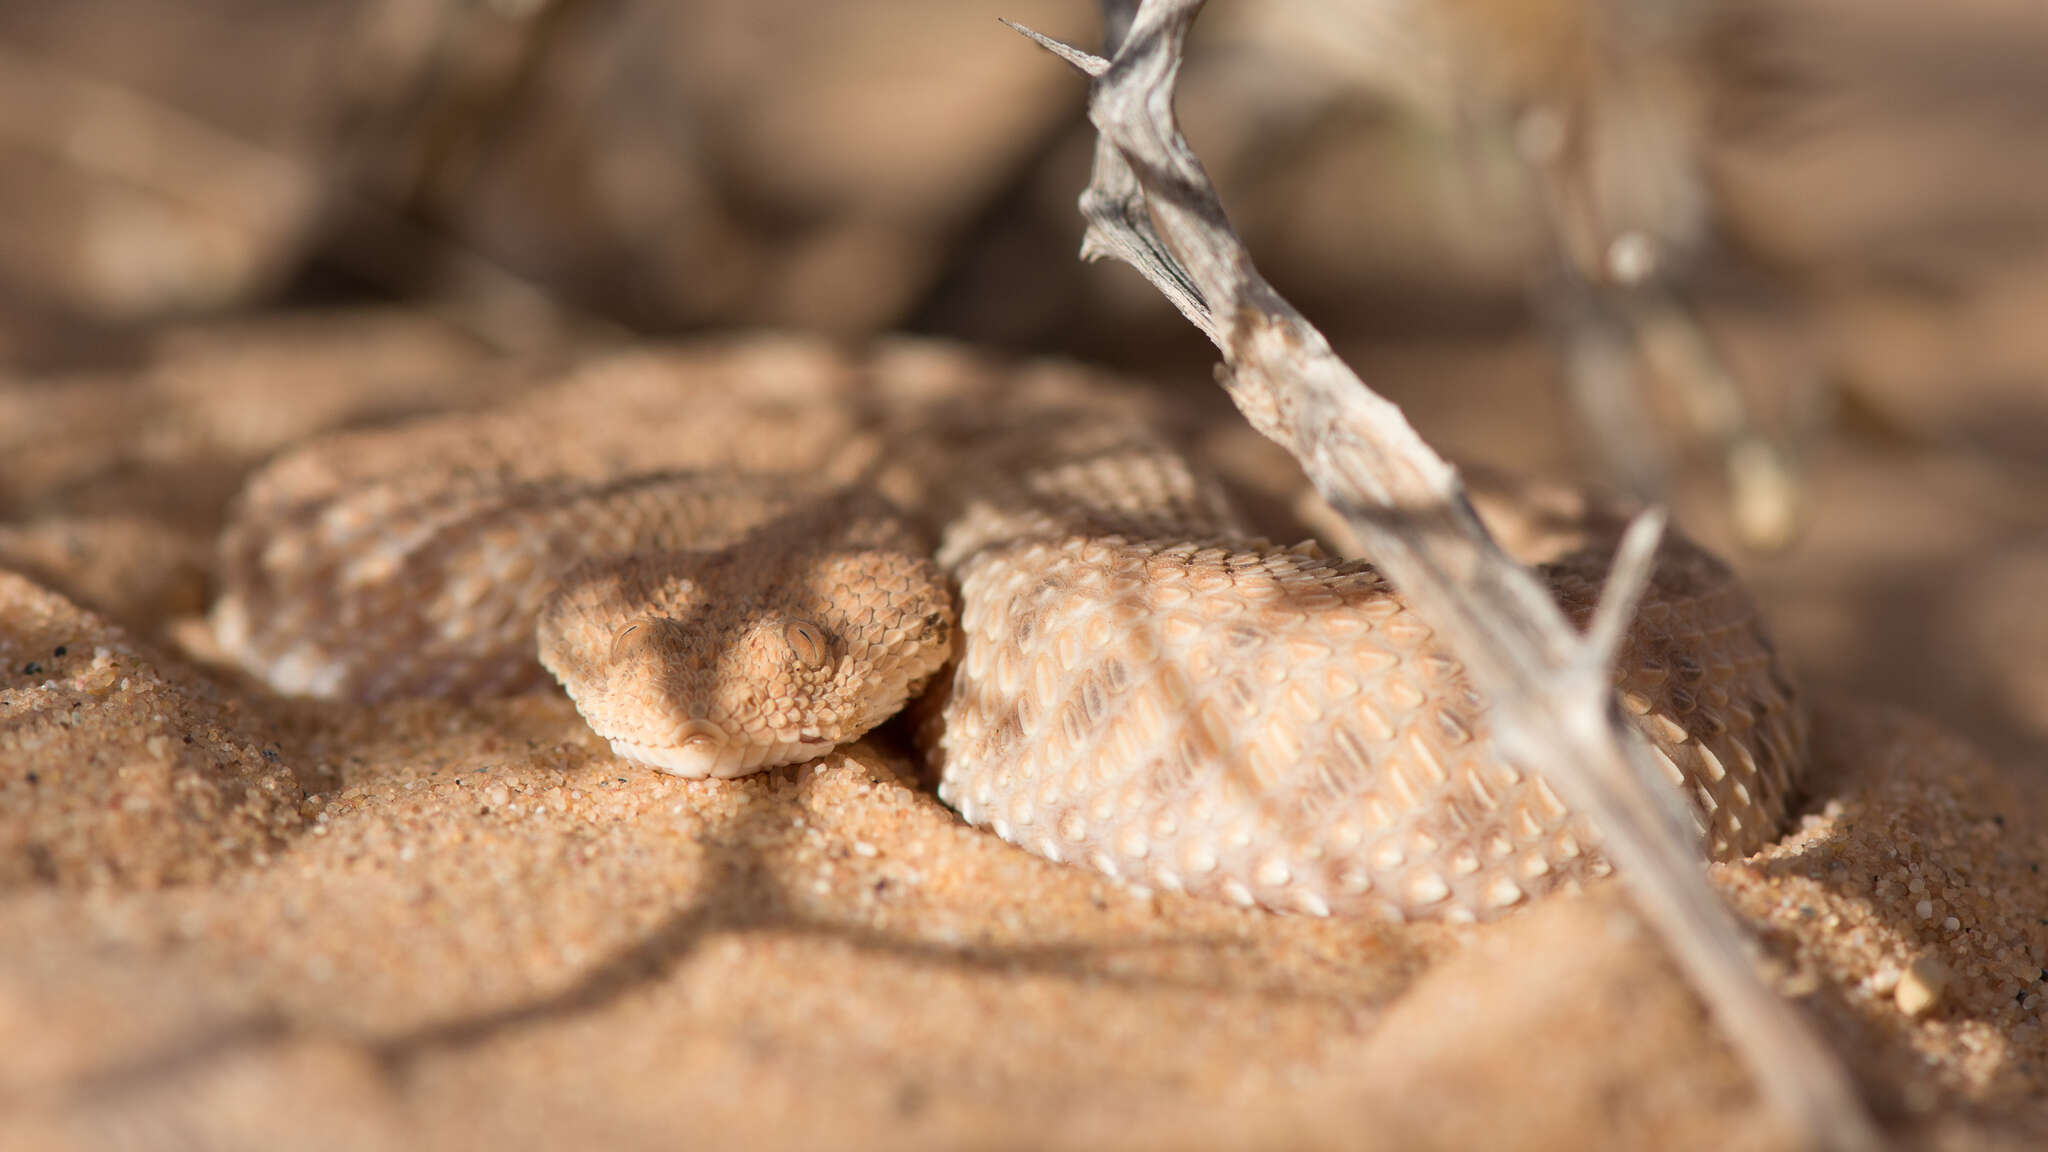 Image of Sahara Sand Viper